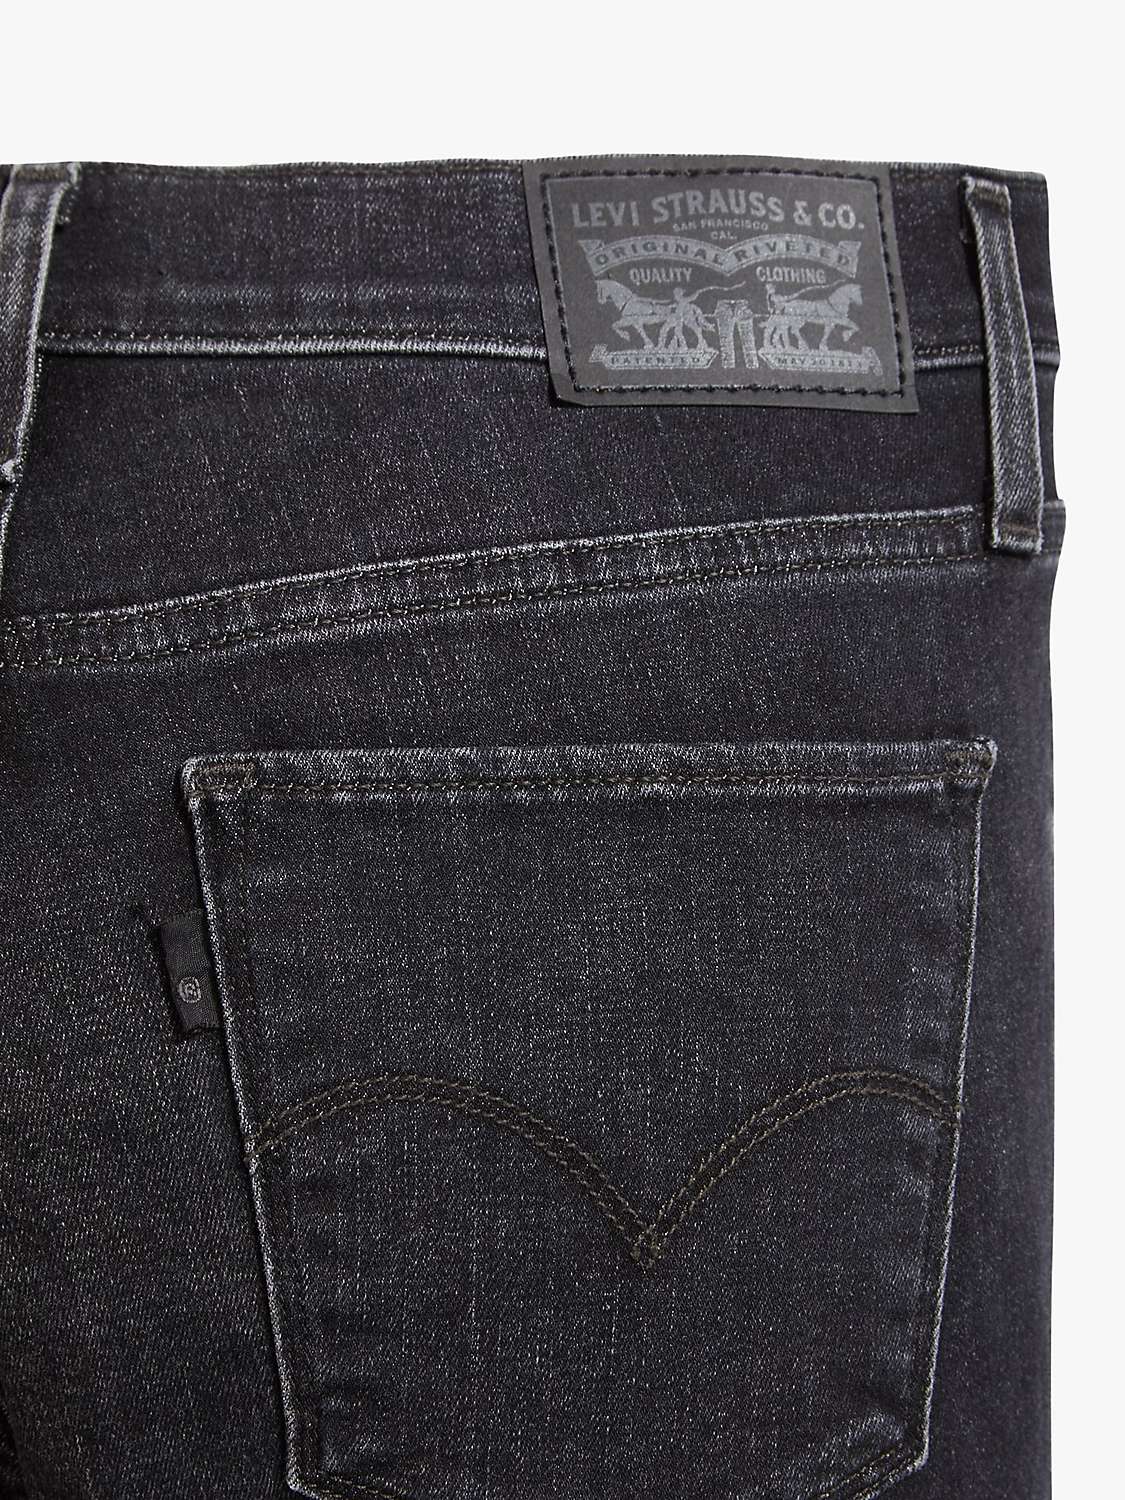 Levi's 311 Shaping Skinny Jeans, Pebble Grey at John Lewis & Partners